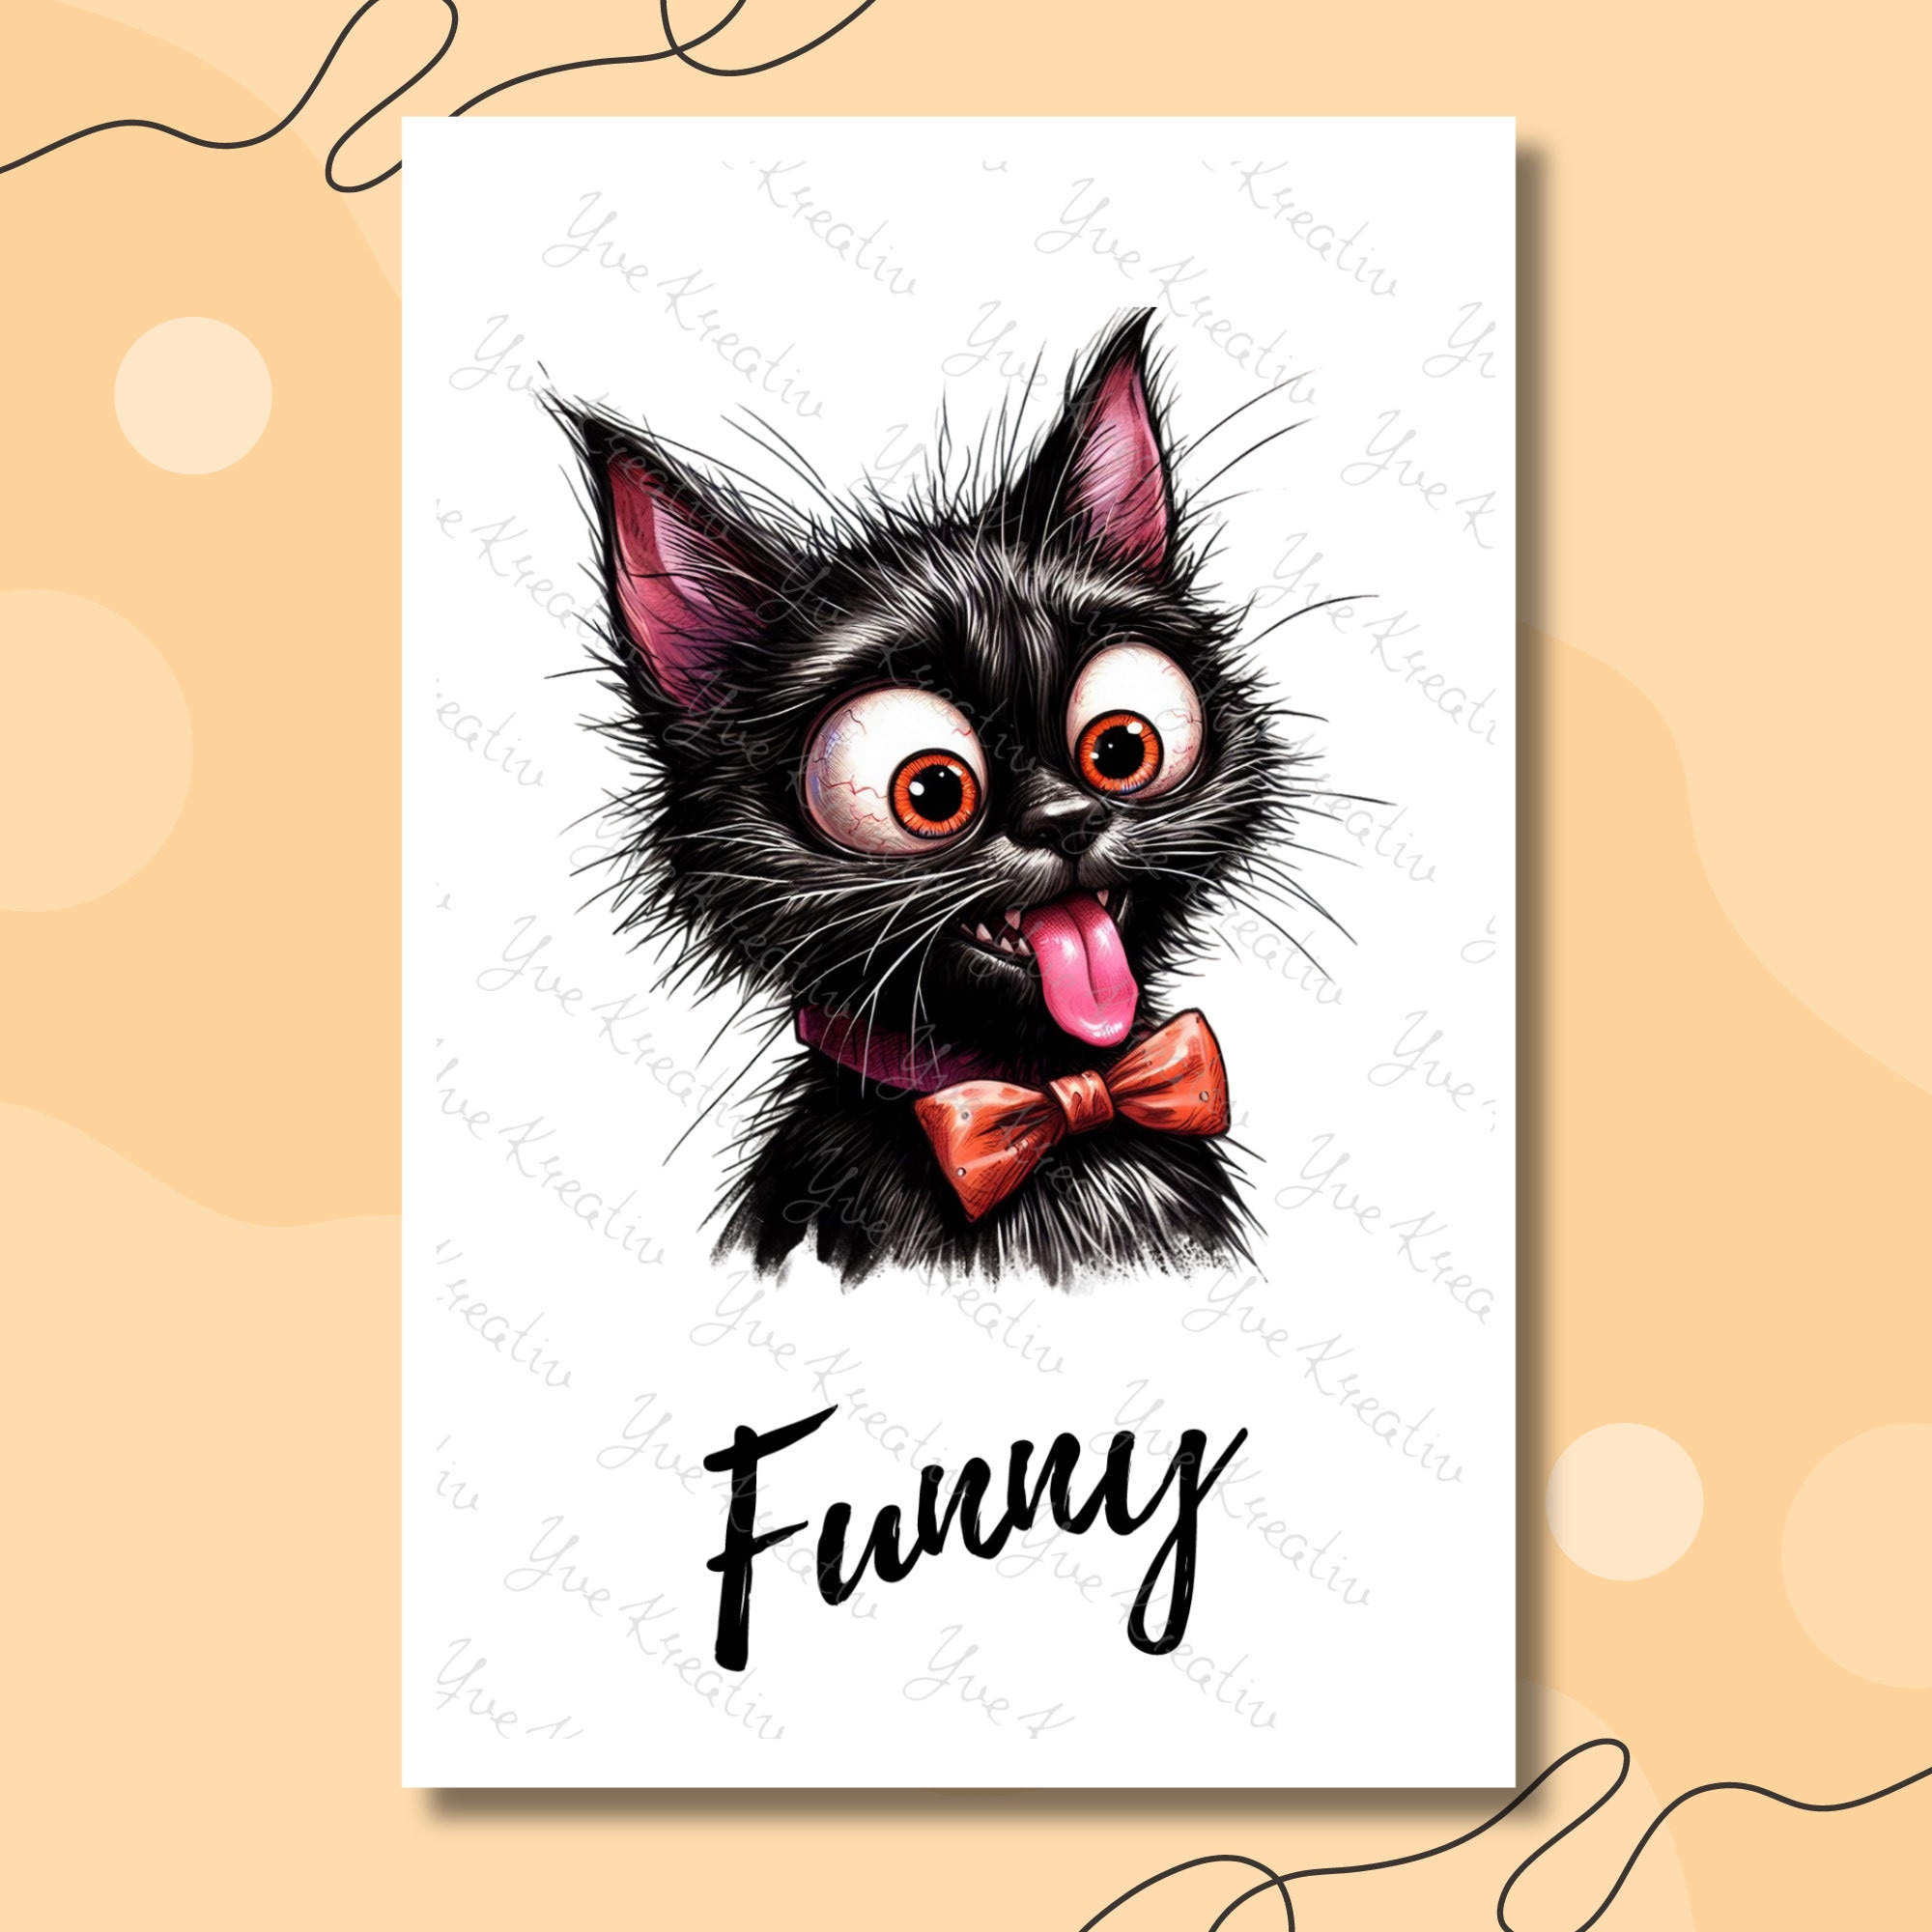 Postkarte, Grußkarte, Karte zum Geburtstag I Crazy, Funny, Lovely, Katze